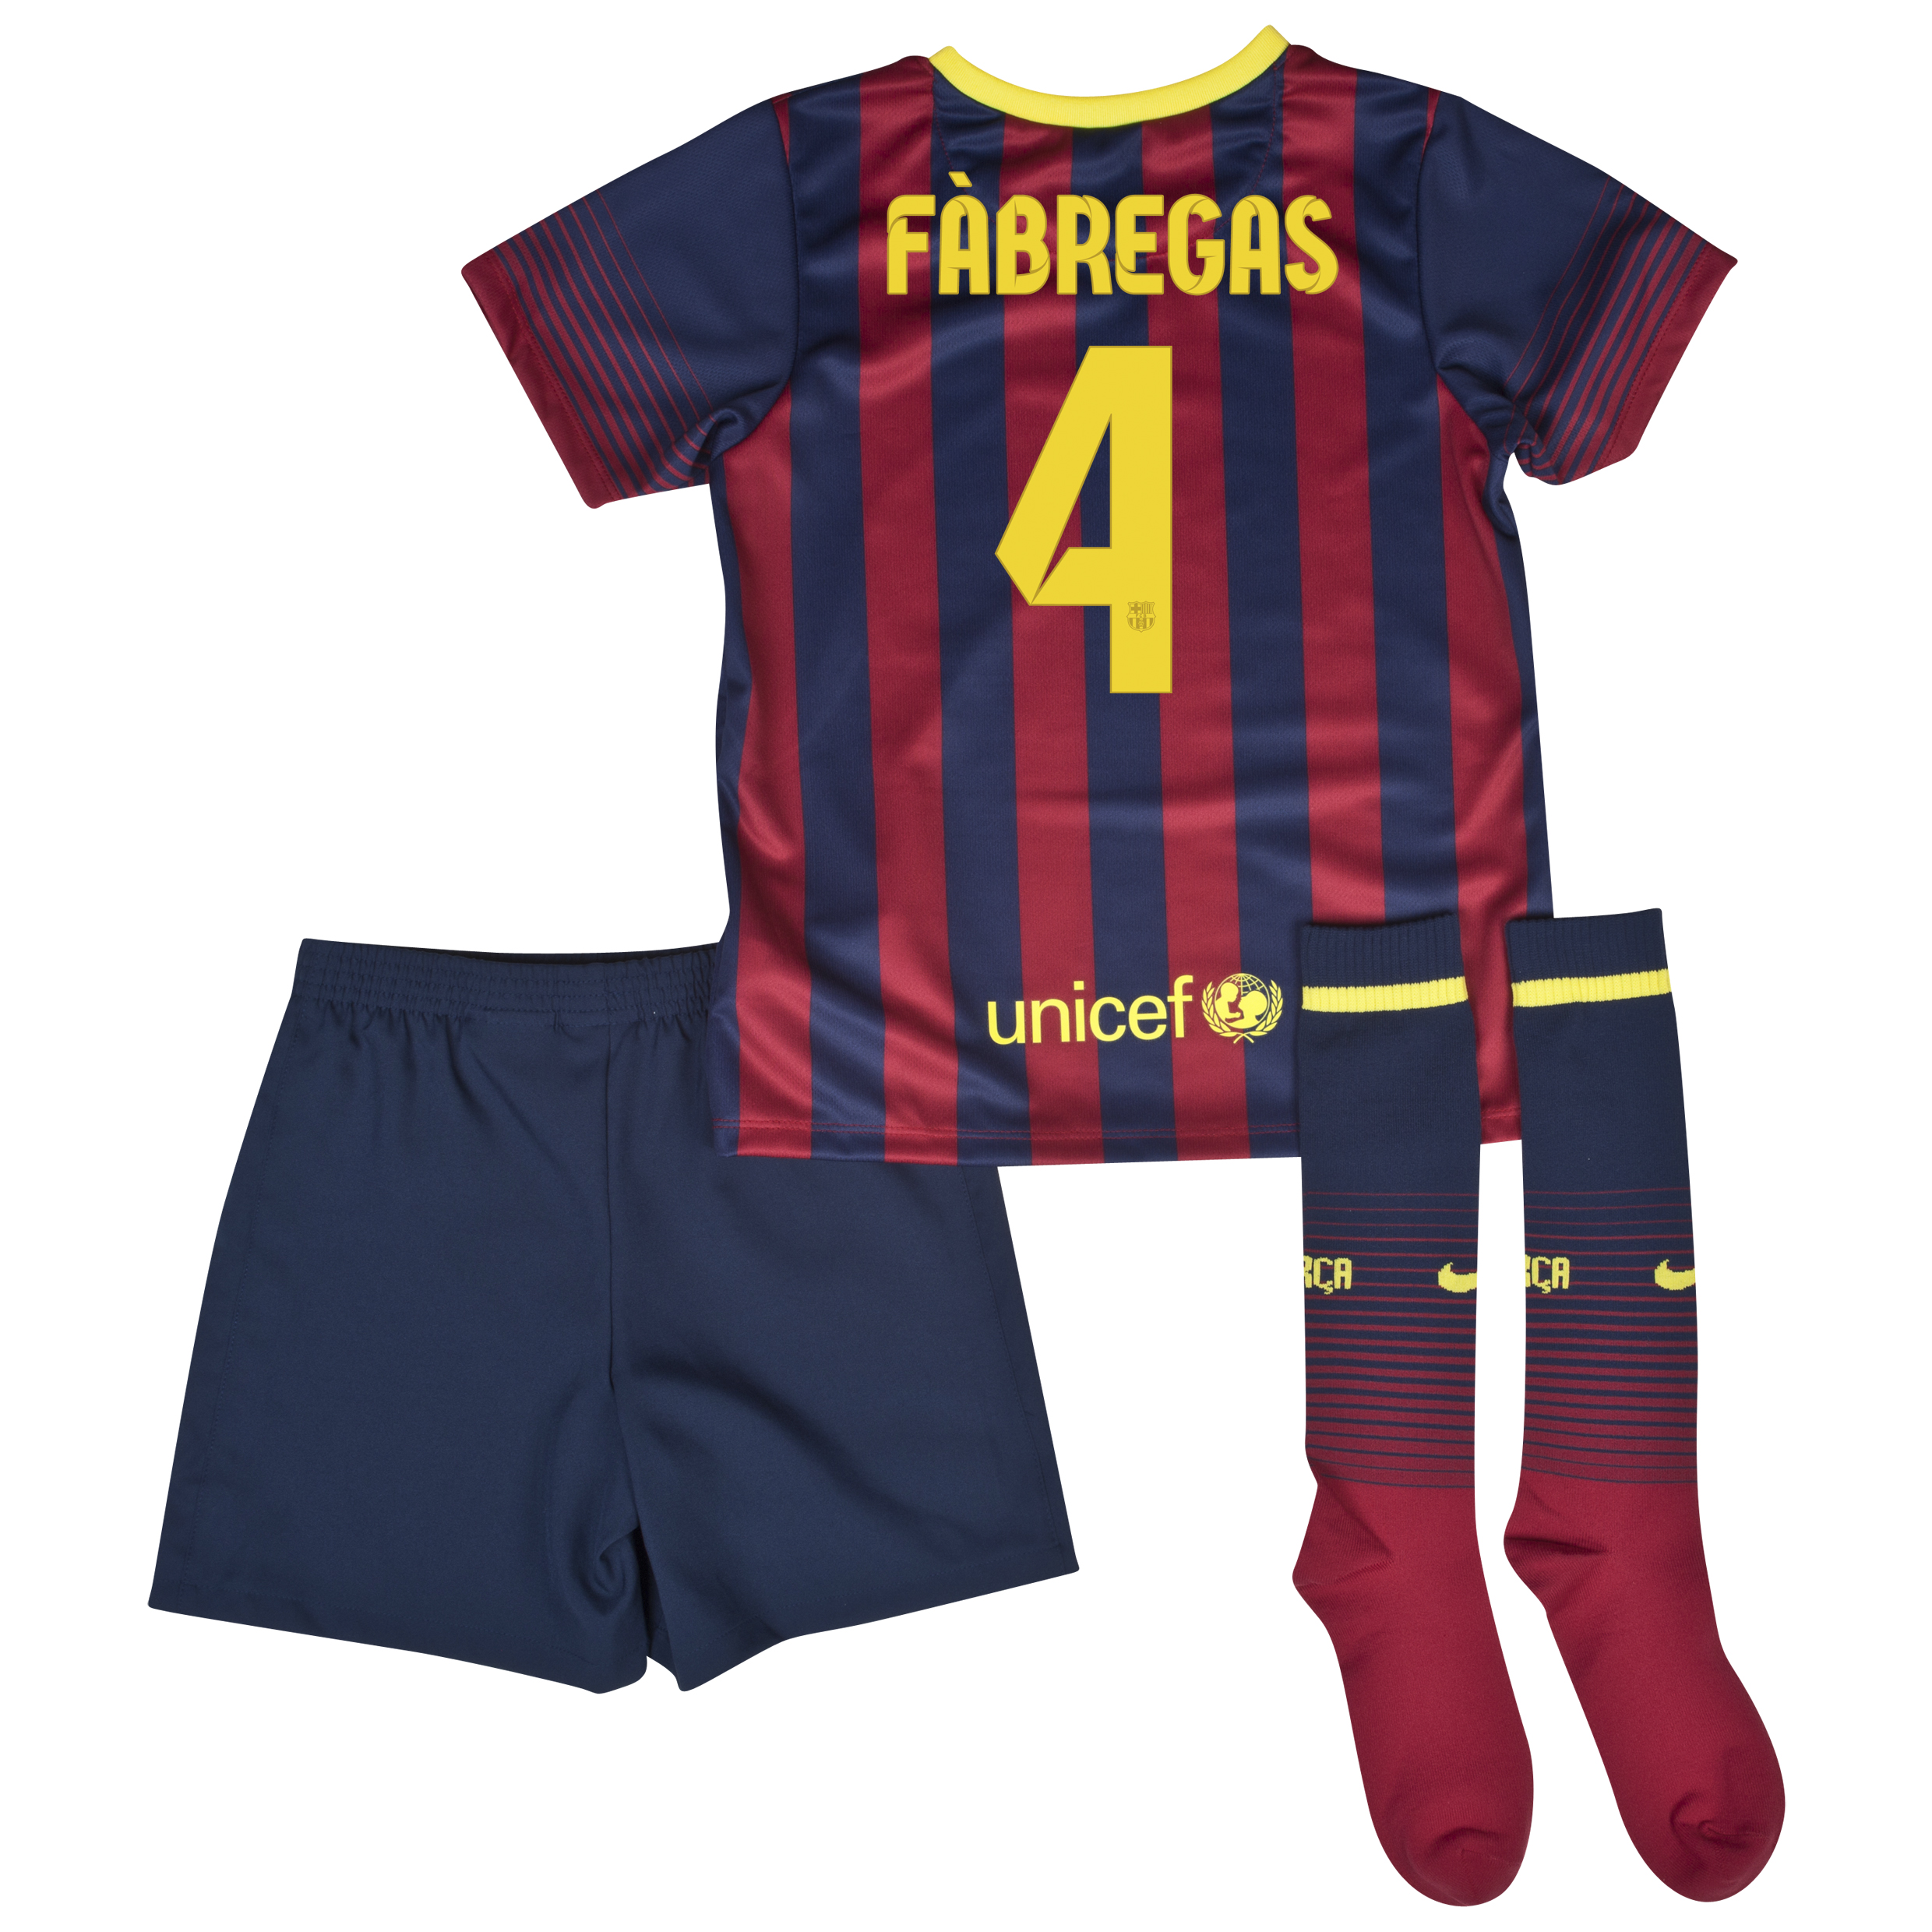 Barcelona Home Kit 2013/14 - Little Boys with Fabregas 4 printing